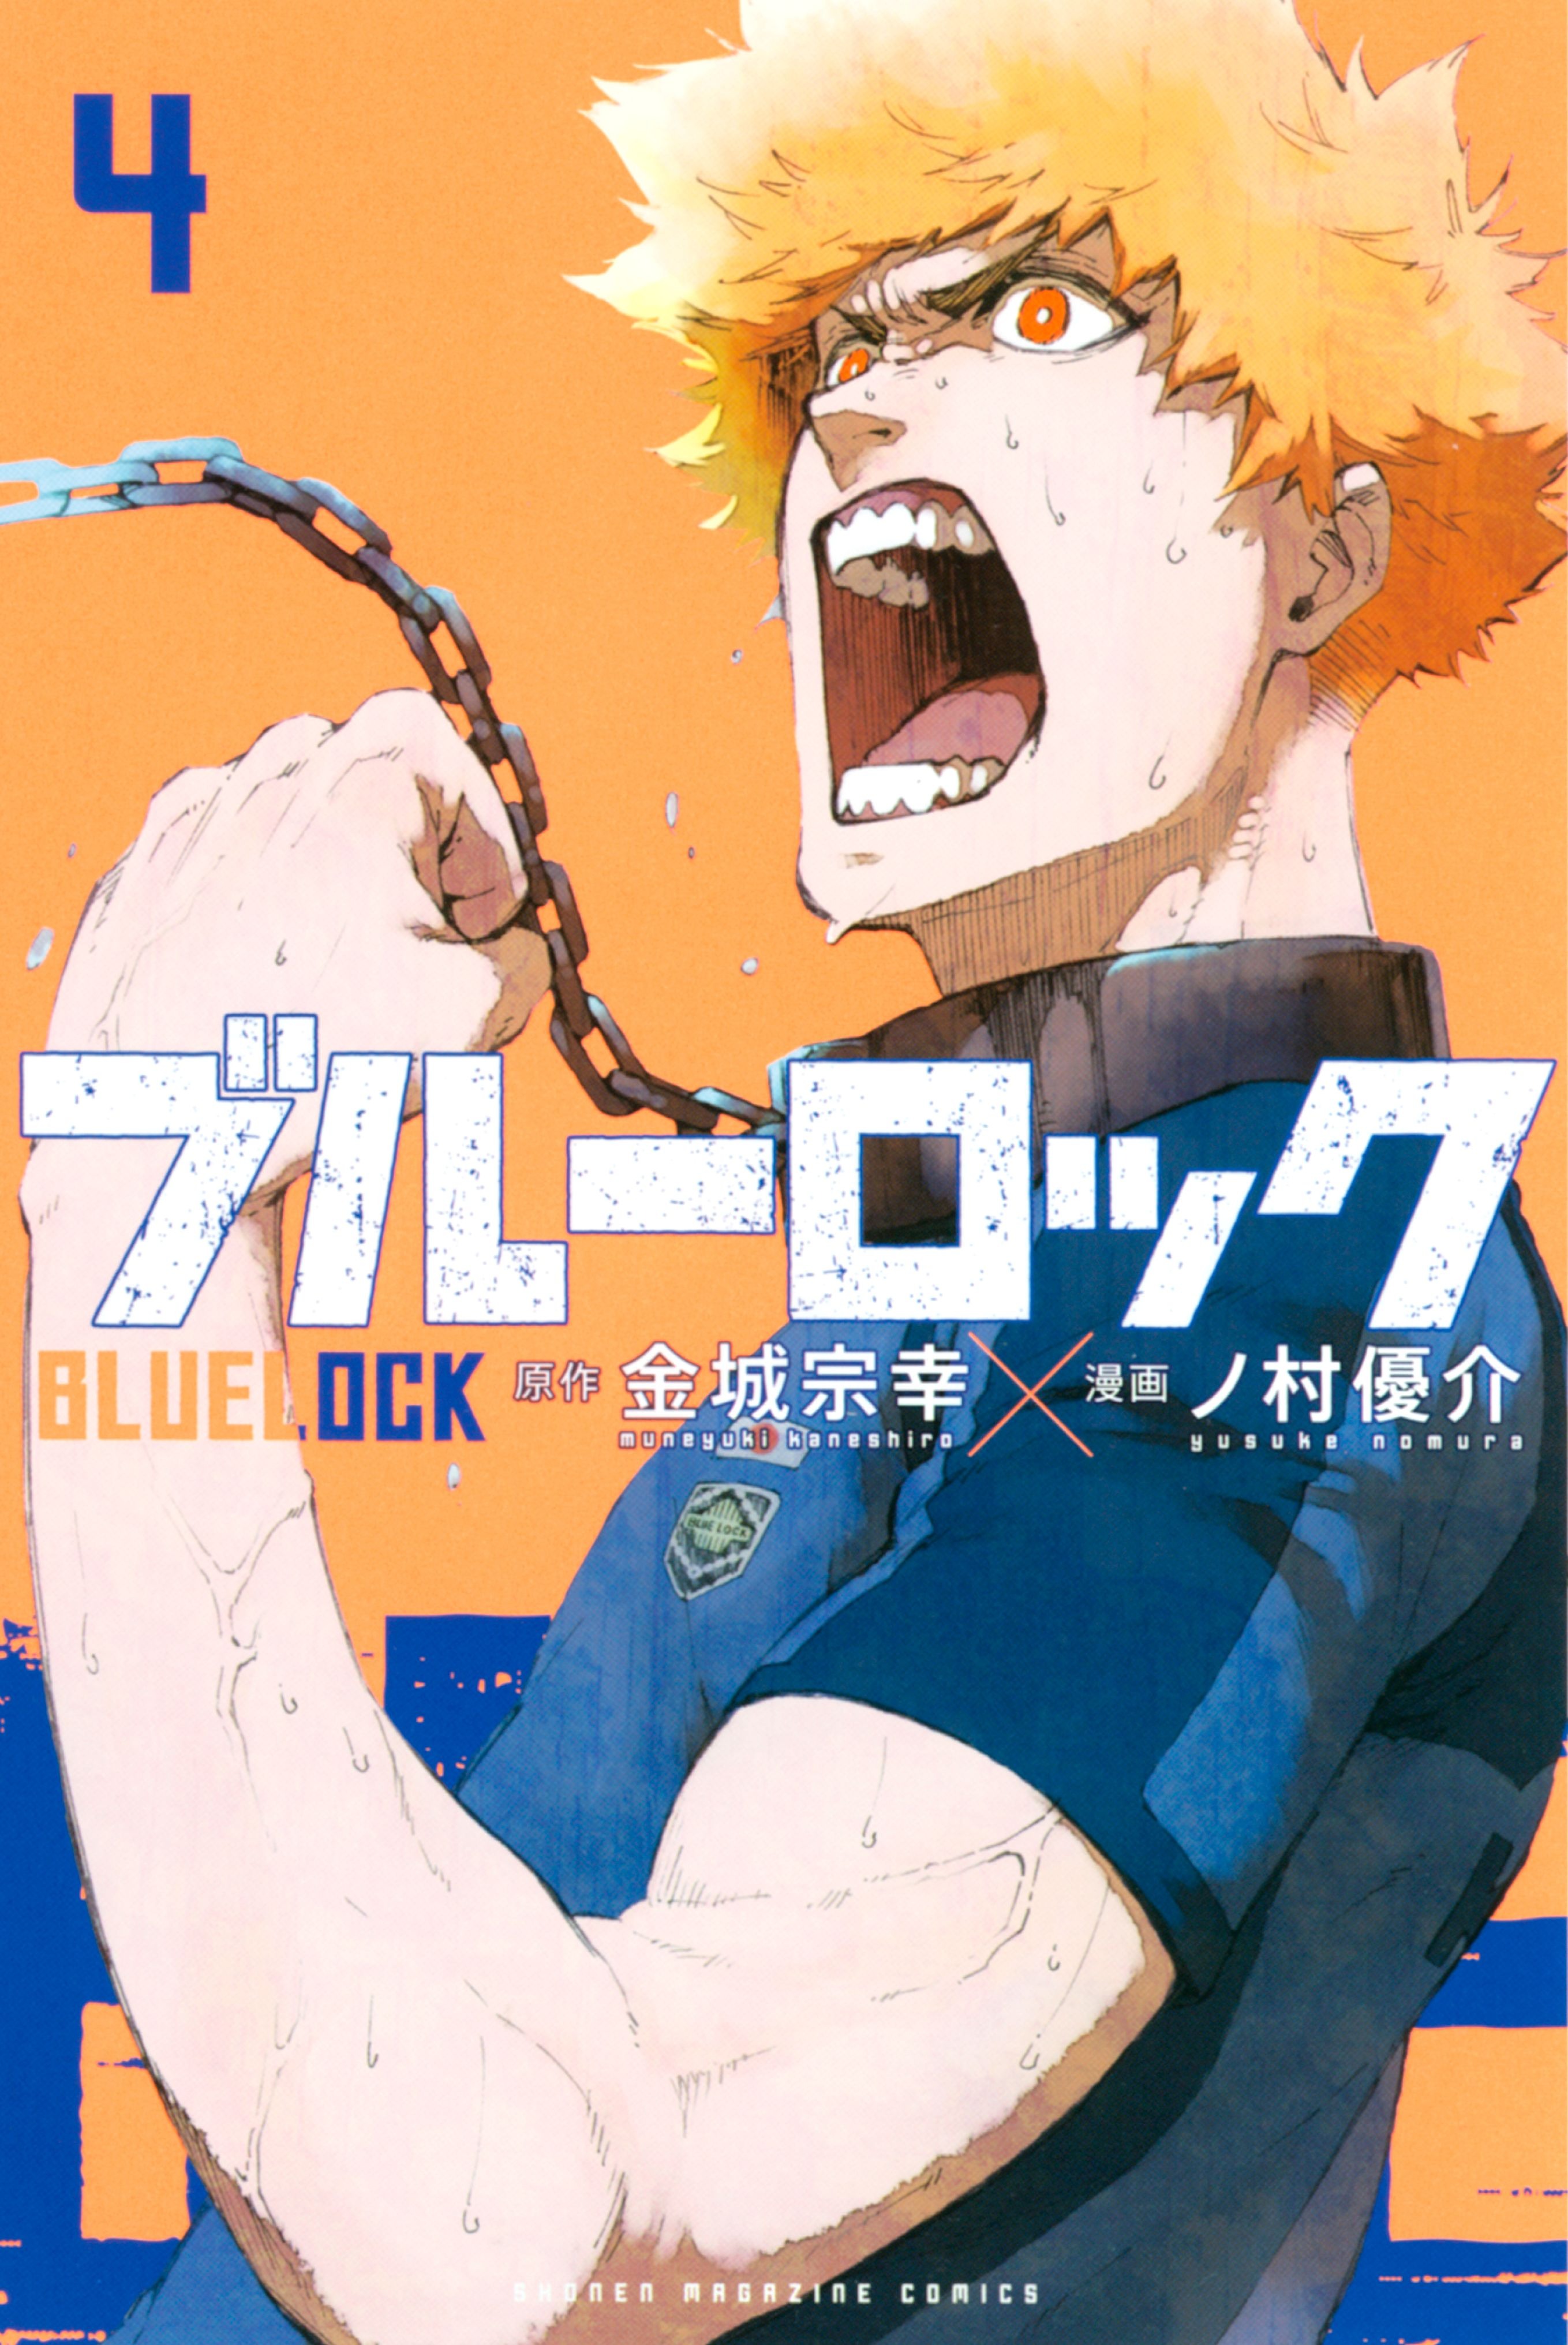 egoist striker  Blue Lock ☆ ep 23